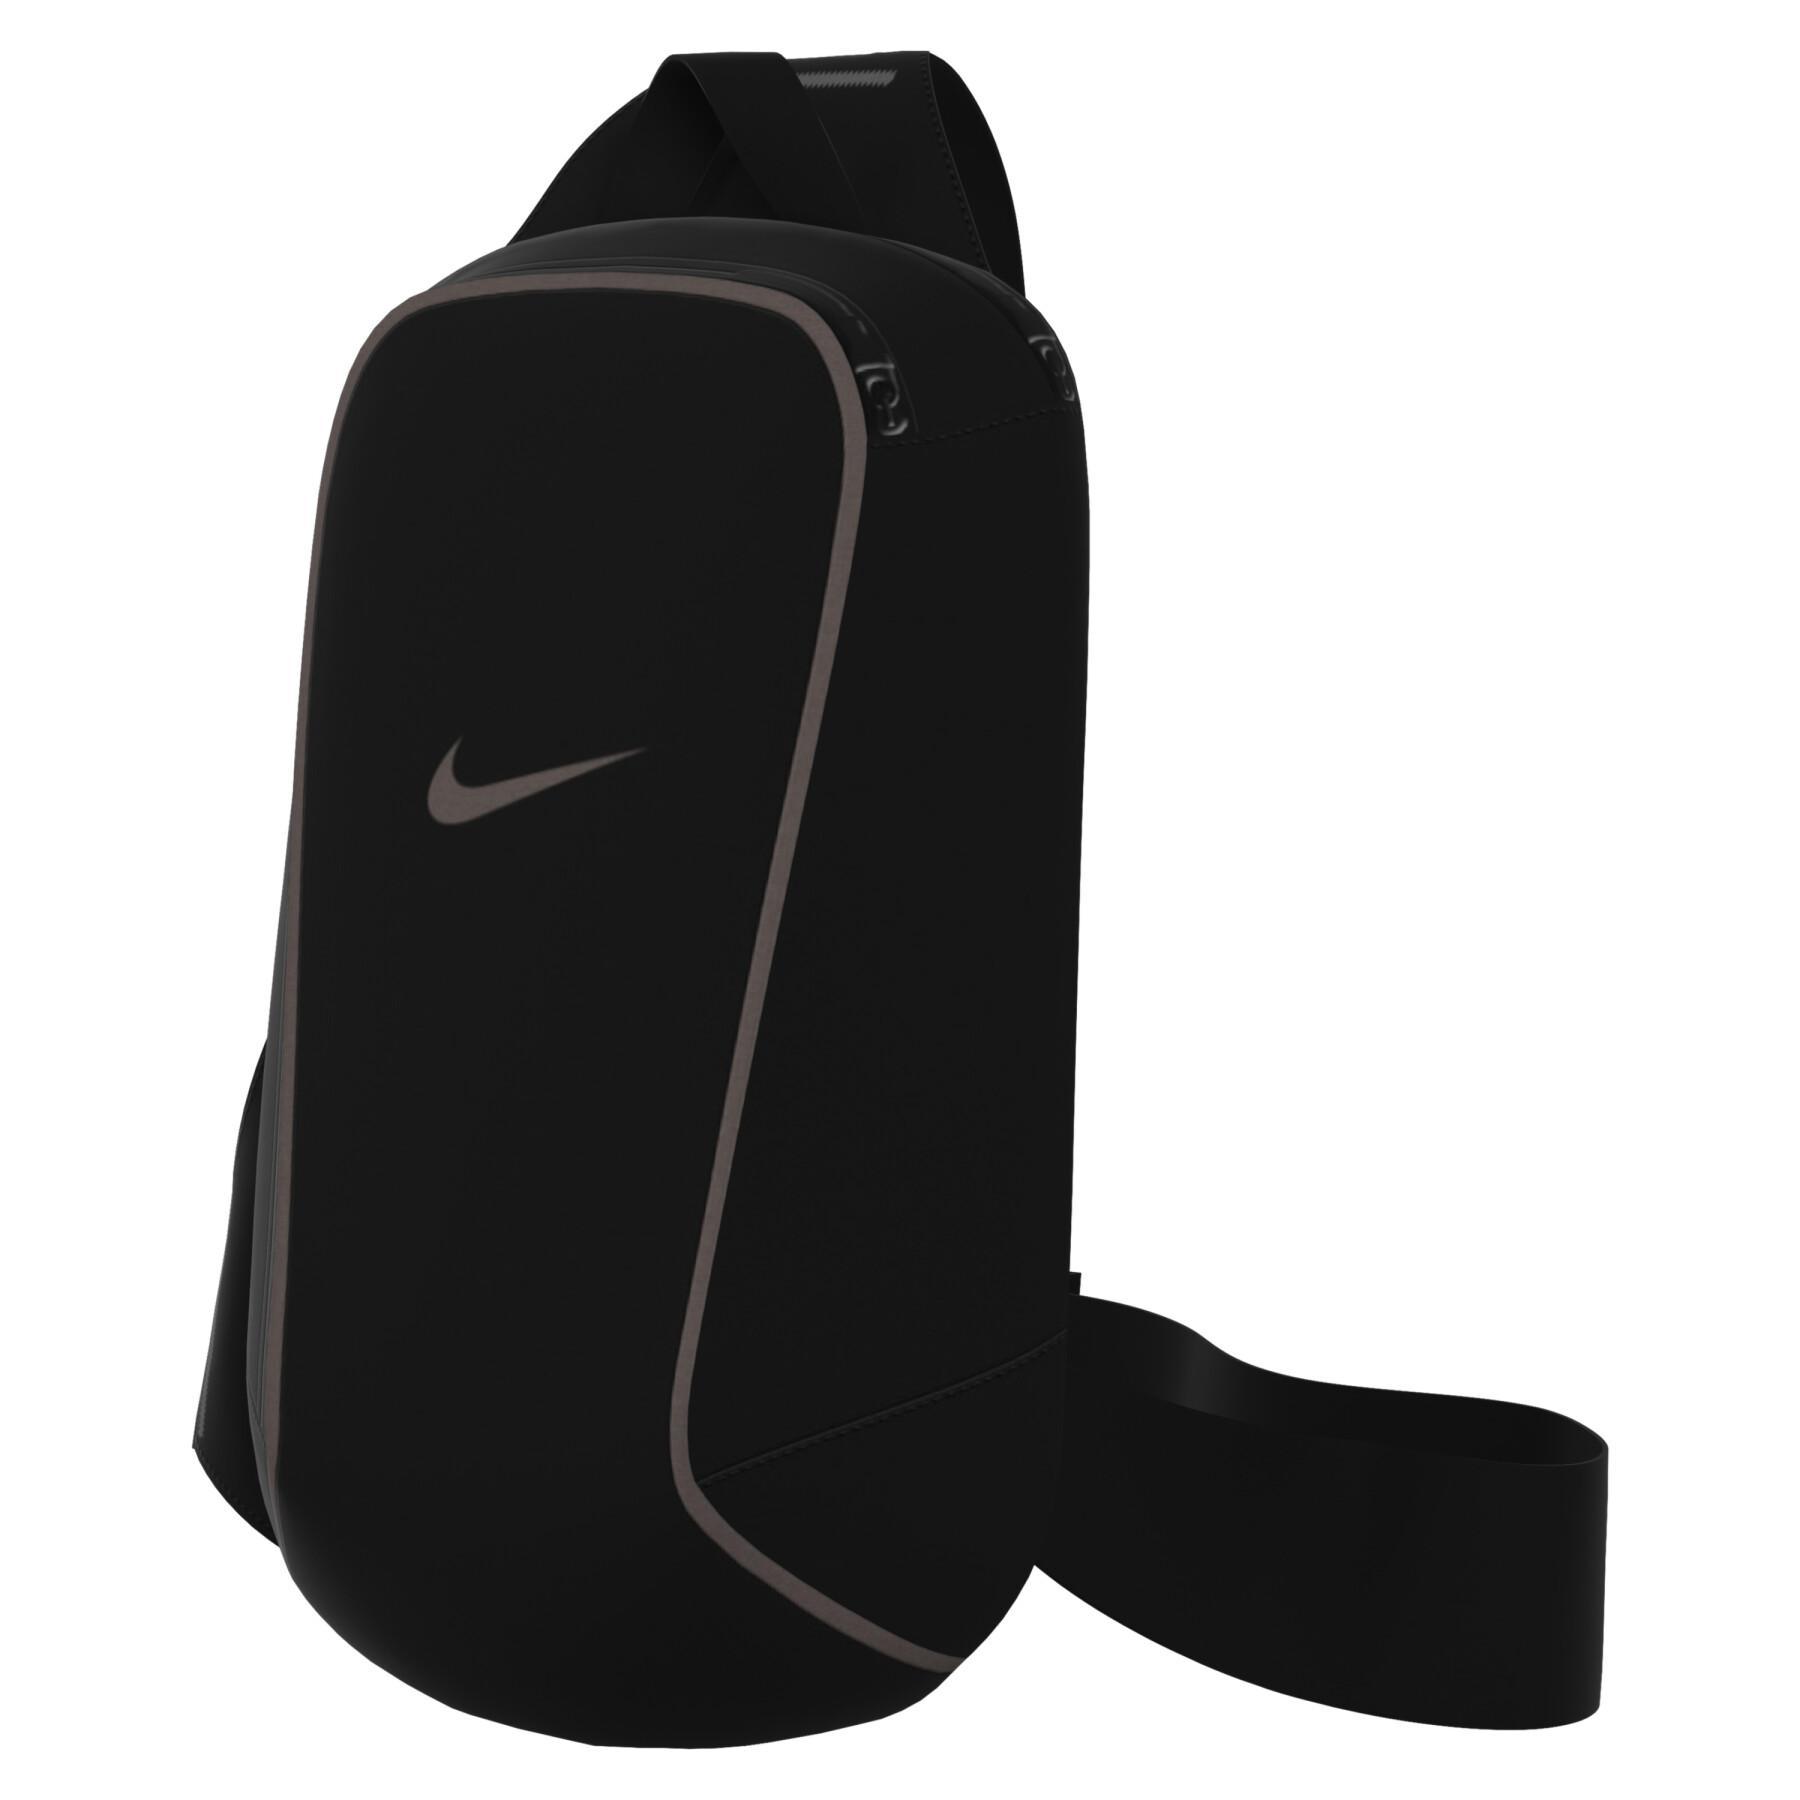 Sac à bandoulière Nike Sportswear Essentials - Nike - Marques - Lifestyle